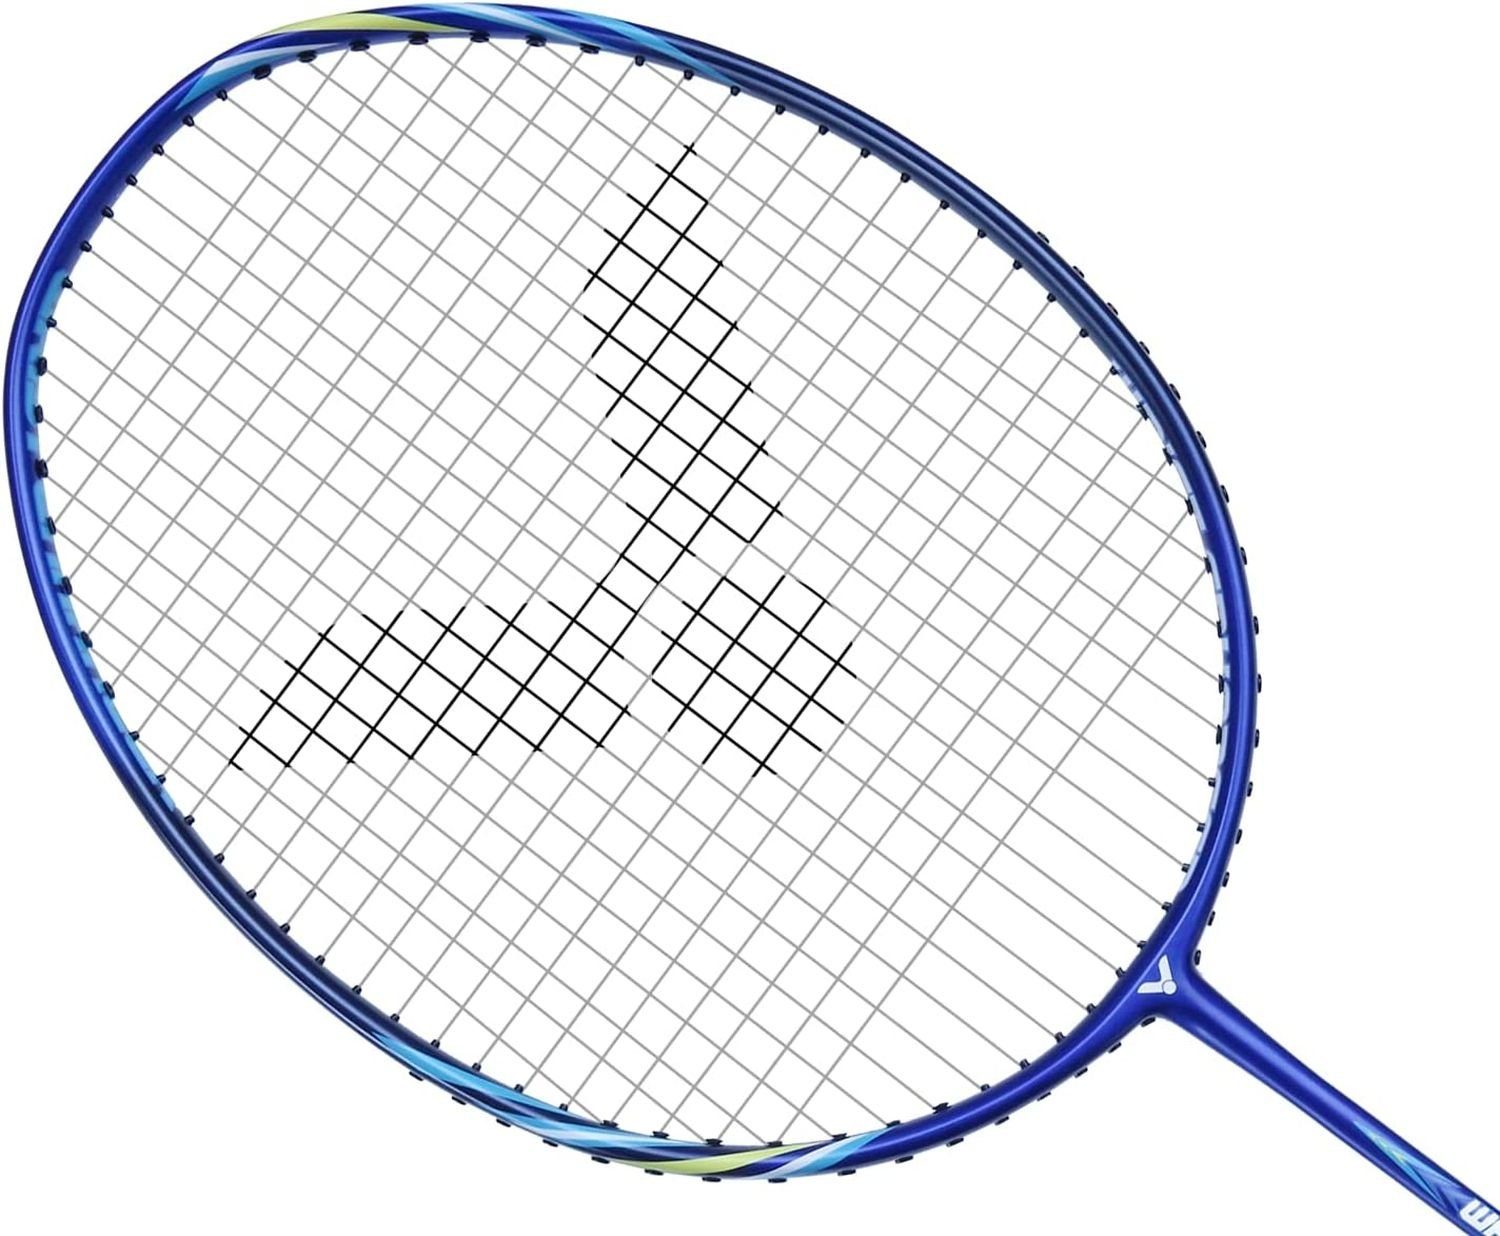 VICTOR Badmintonschläger Wrist Enhancer 140 F | Schläger